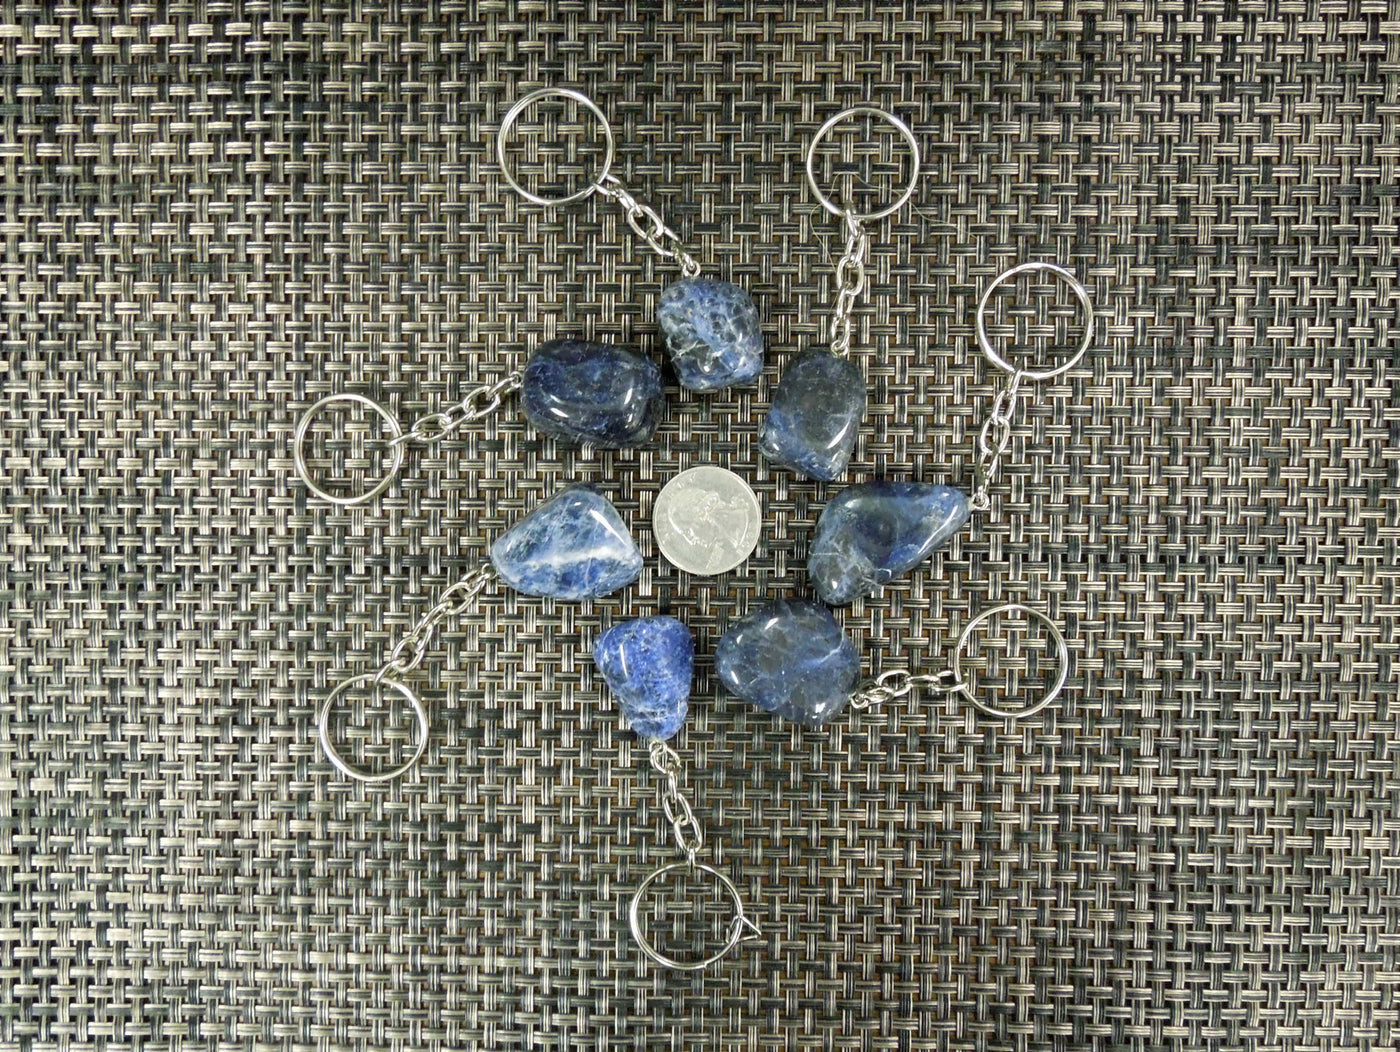 Keychain - Tumbled Sodalite Silver Toned Key Chain - Natural Blue Stone Keychain - Polished Sodalite Choose 1, 5, 10, 25 Qty